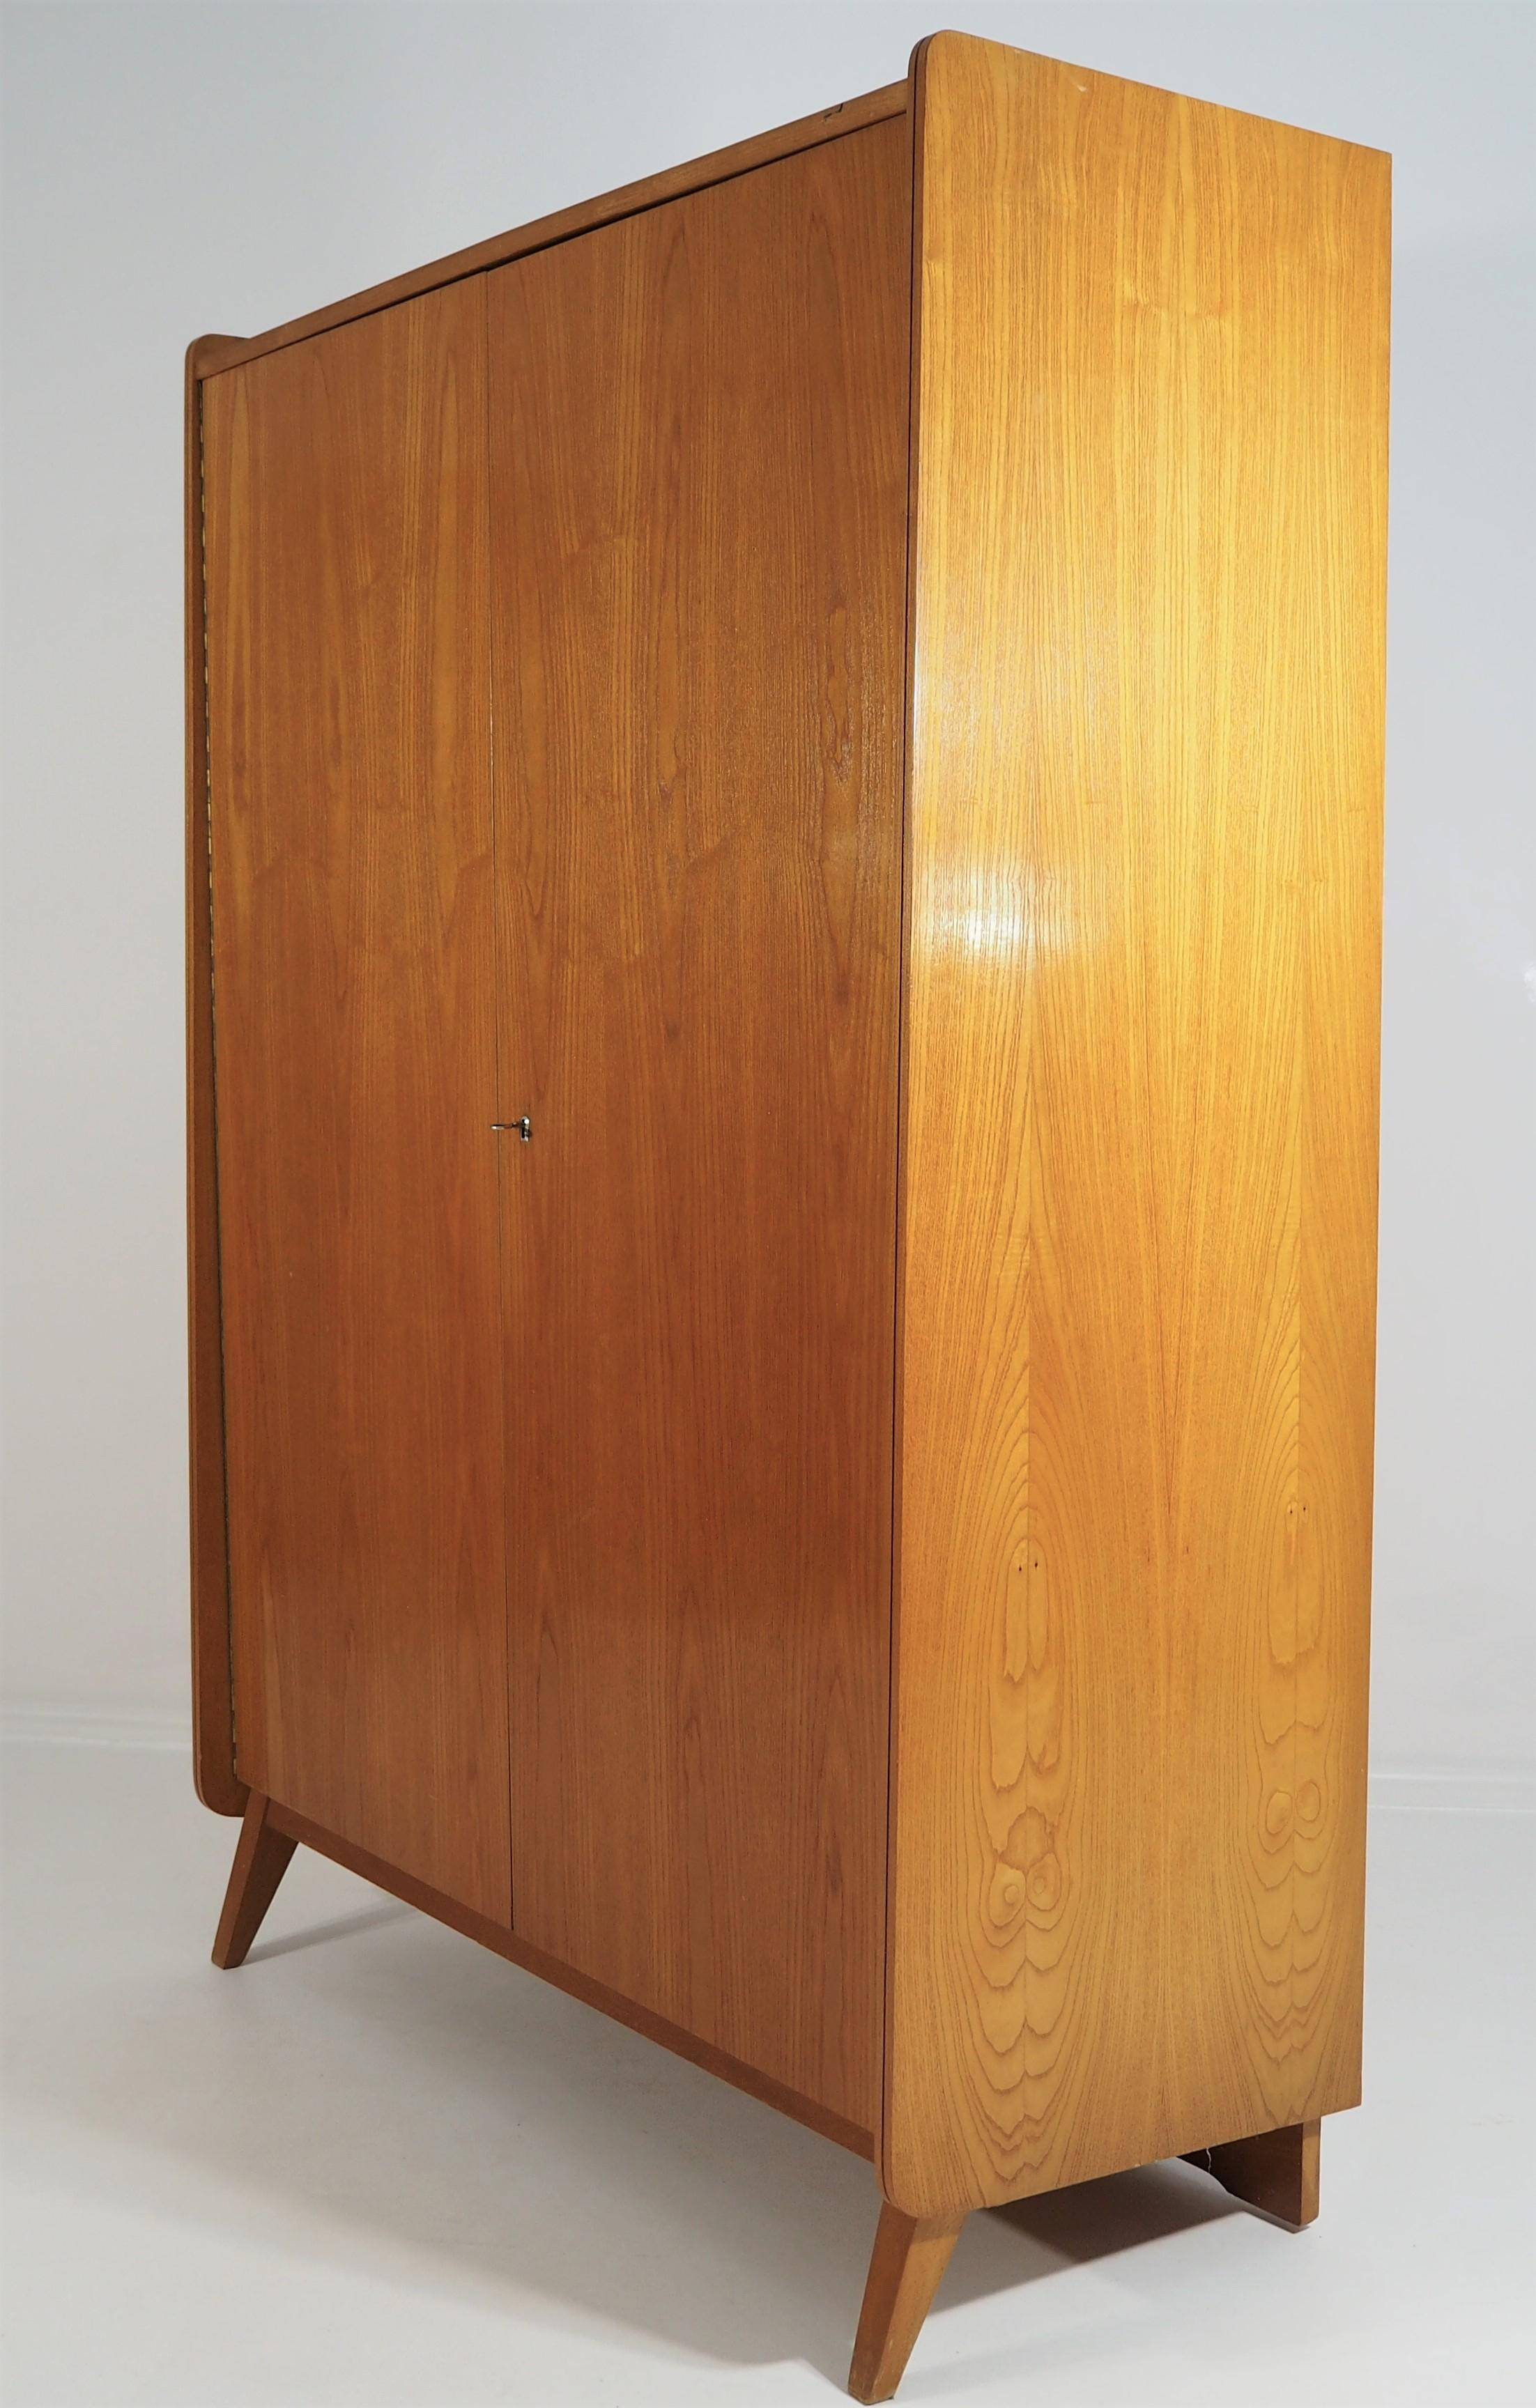 Vintage wardrobe from Tatra, circa 1960s. Original condition with label. Dimensions: height 173cm, width 118cm, depth 52cm.